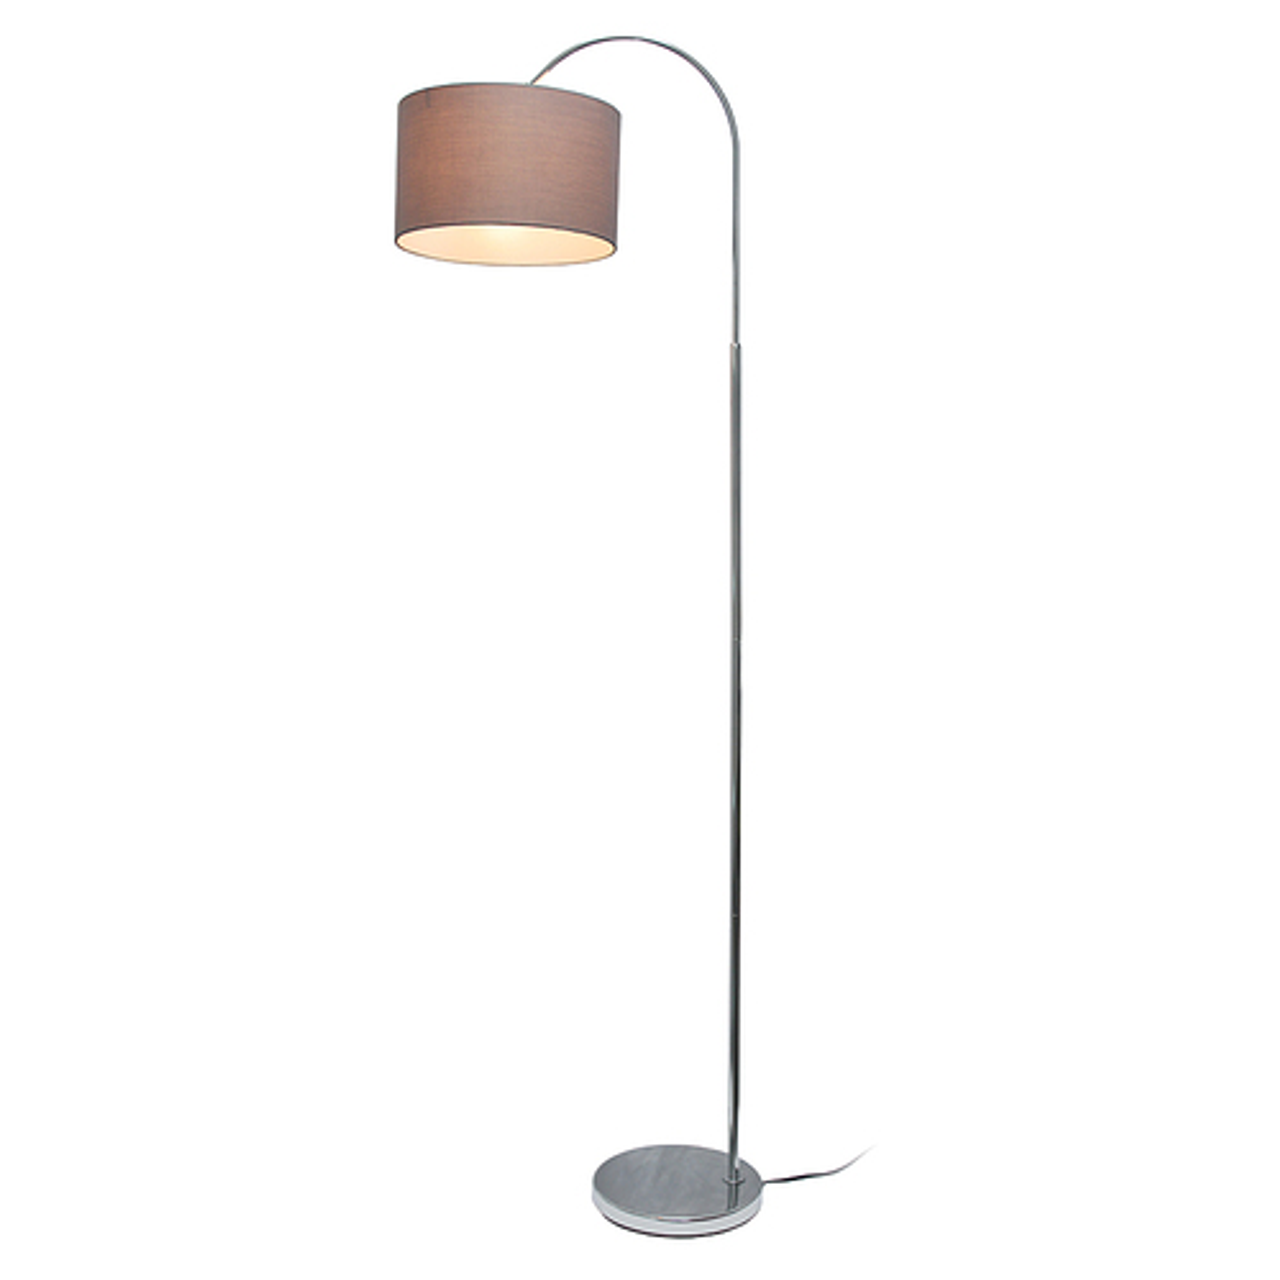 Simple Designs Arched Brushed Nickel Floor Lamp, Gray Shade - Brushed Nickel base/Gray shade